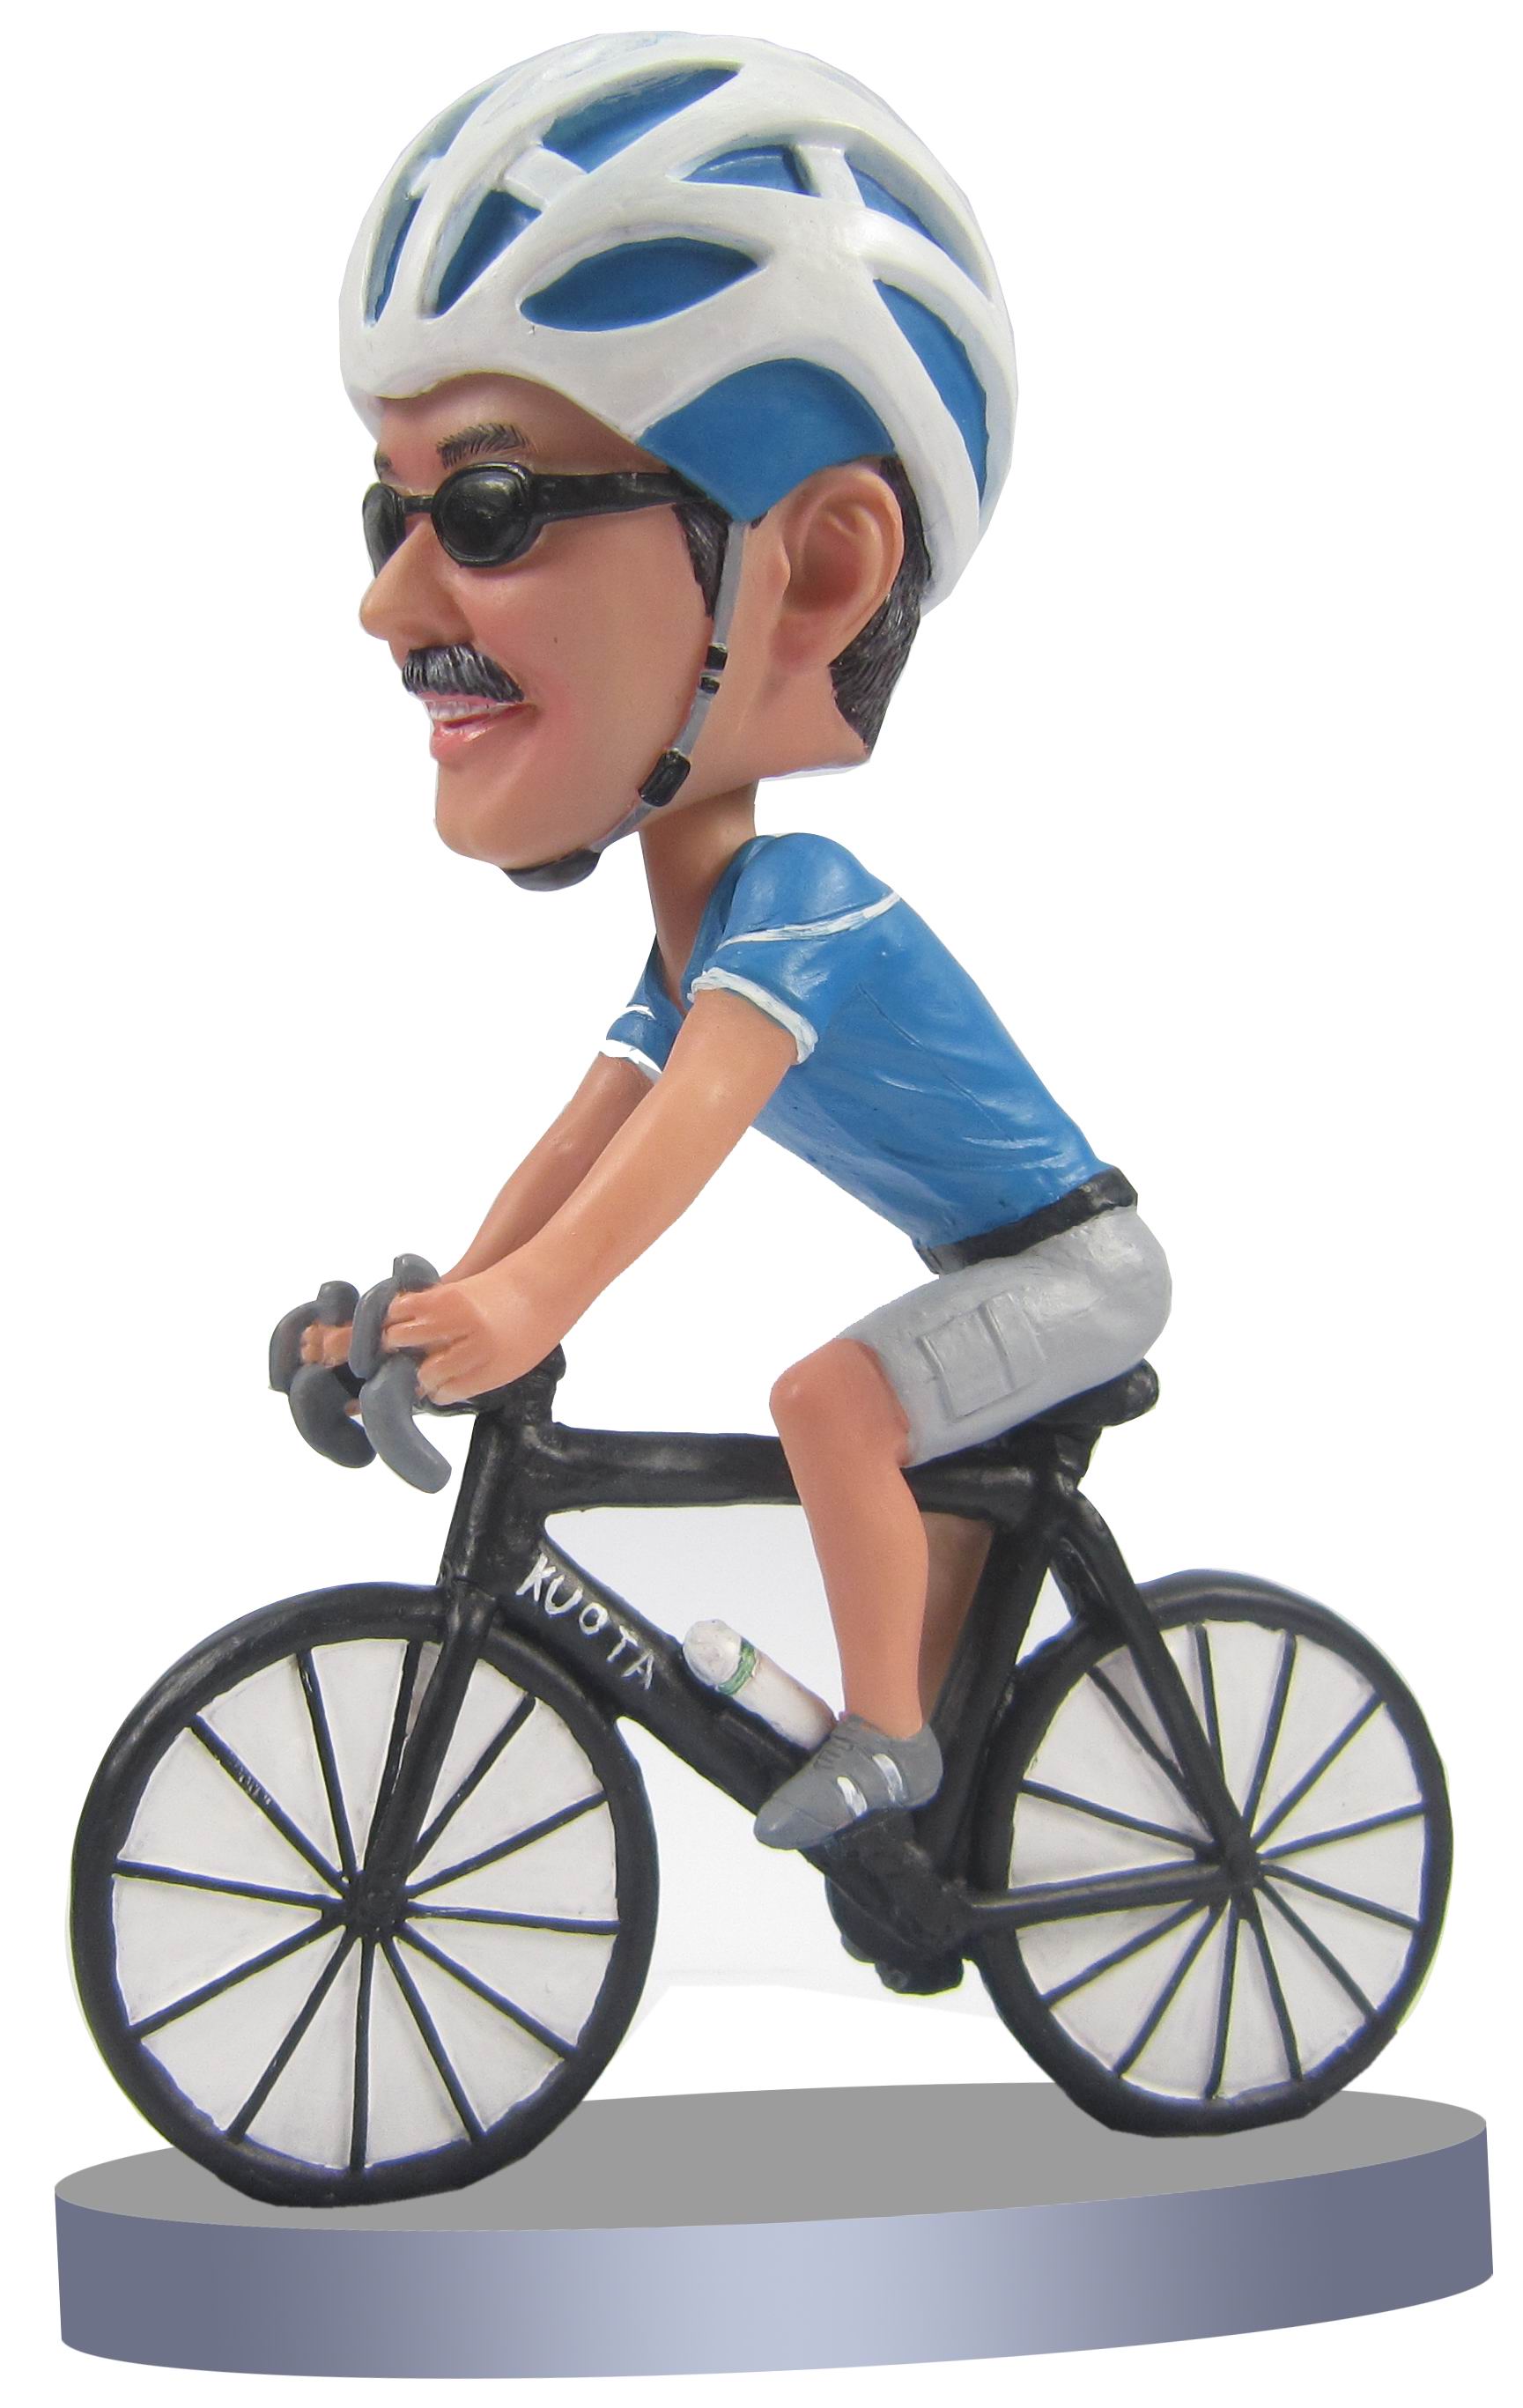 Man Bicycle-Rider custom bobblehead doll